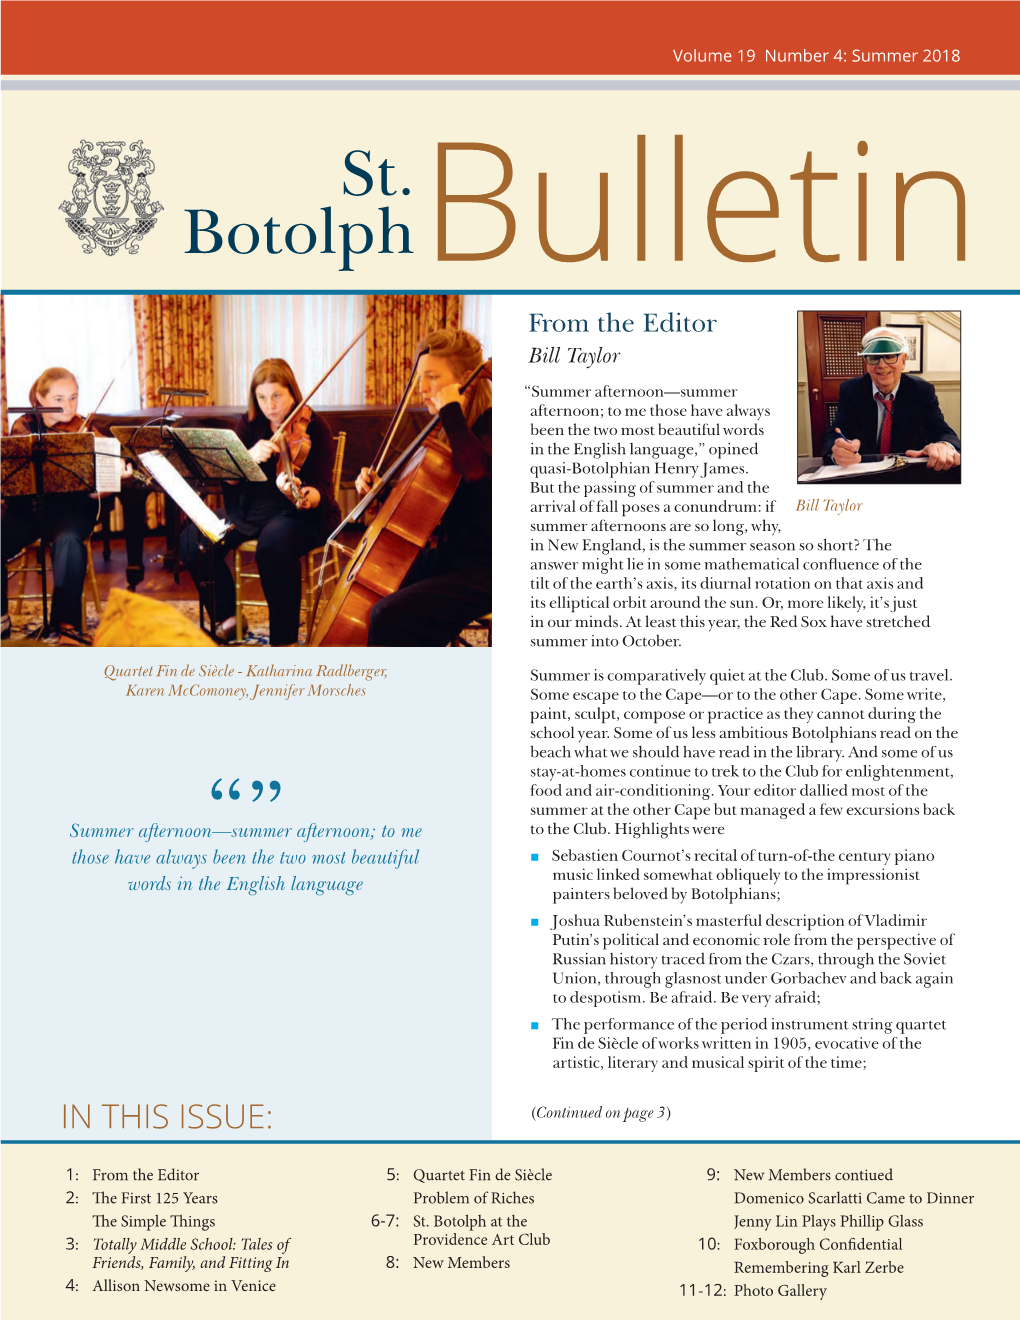 Bulletin from the Editor Bill Taylor